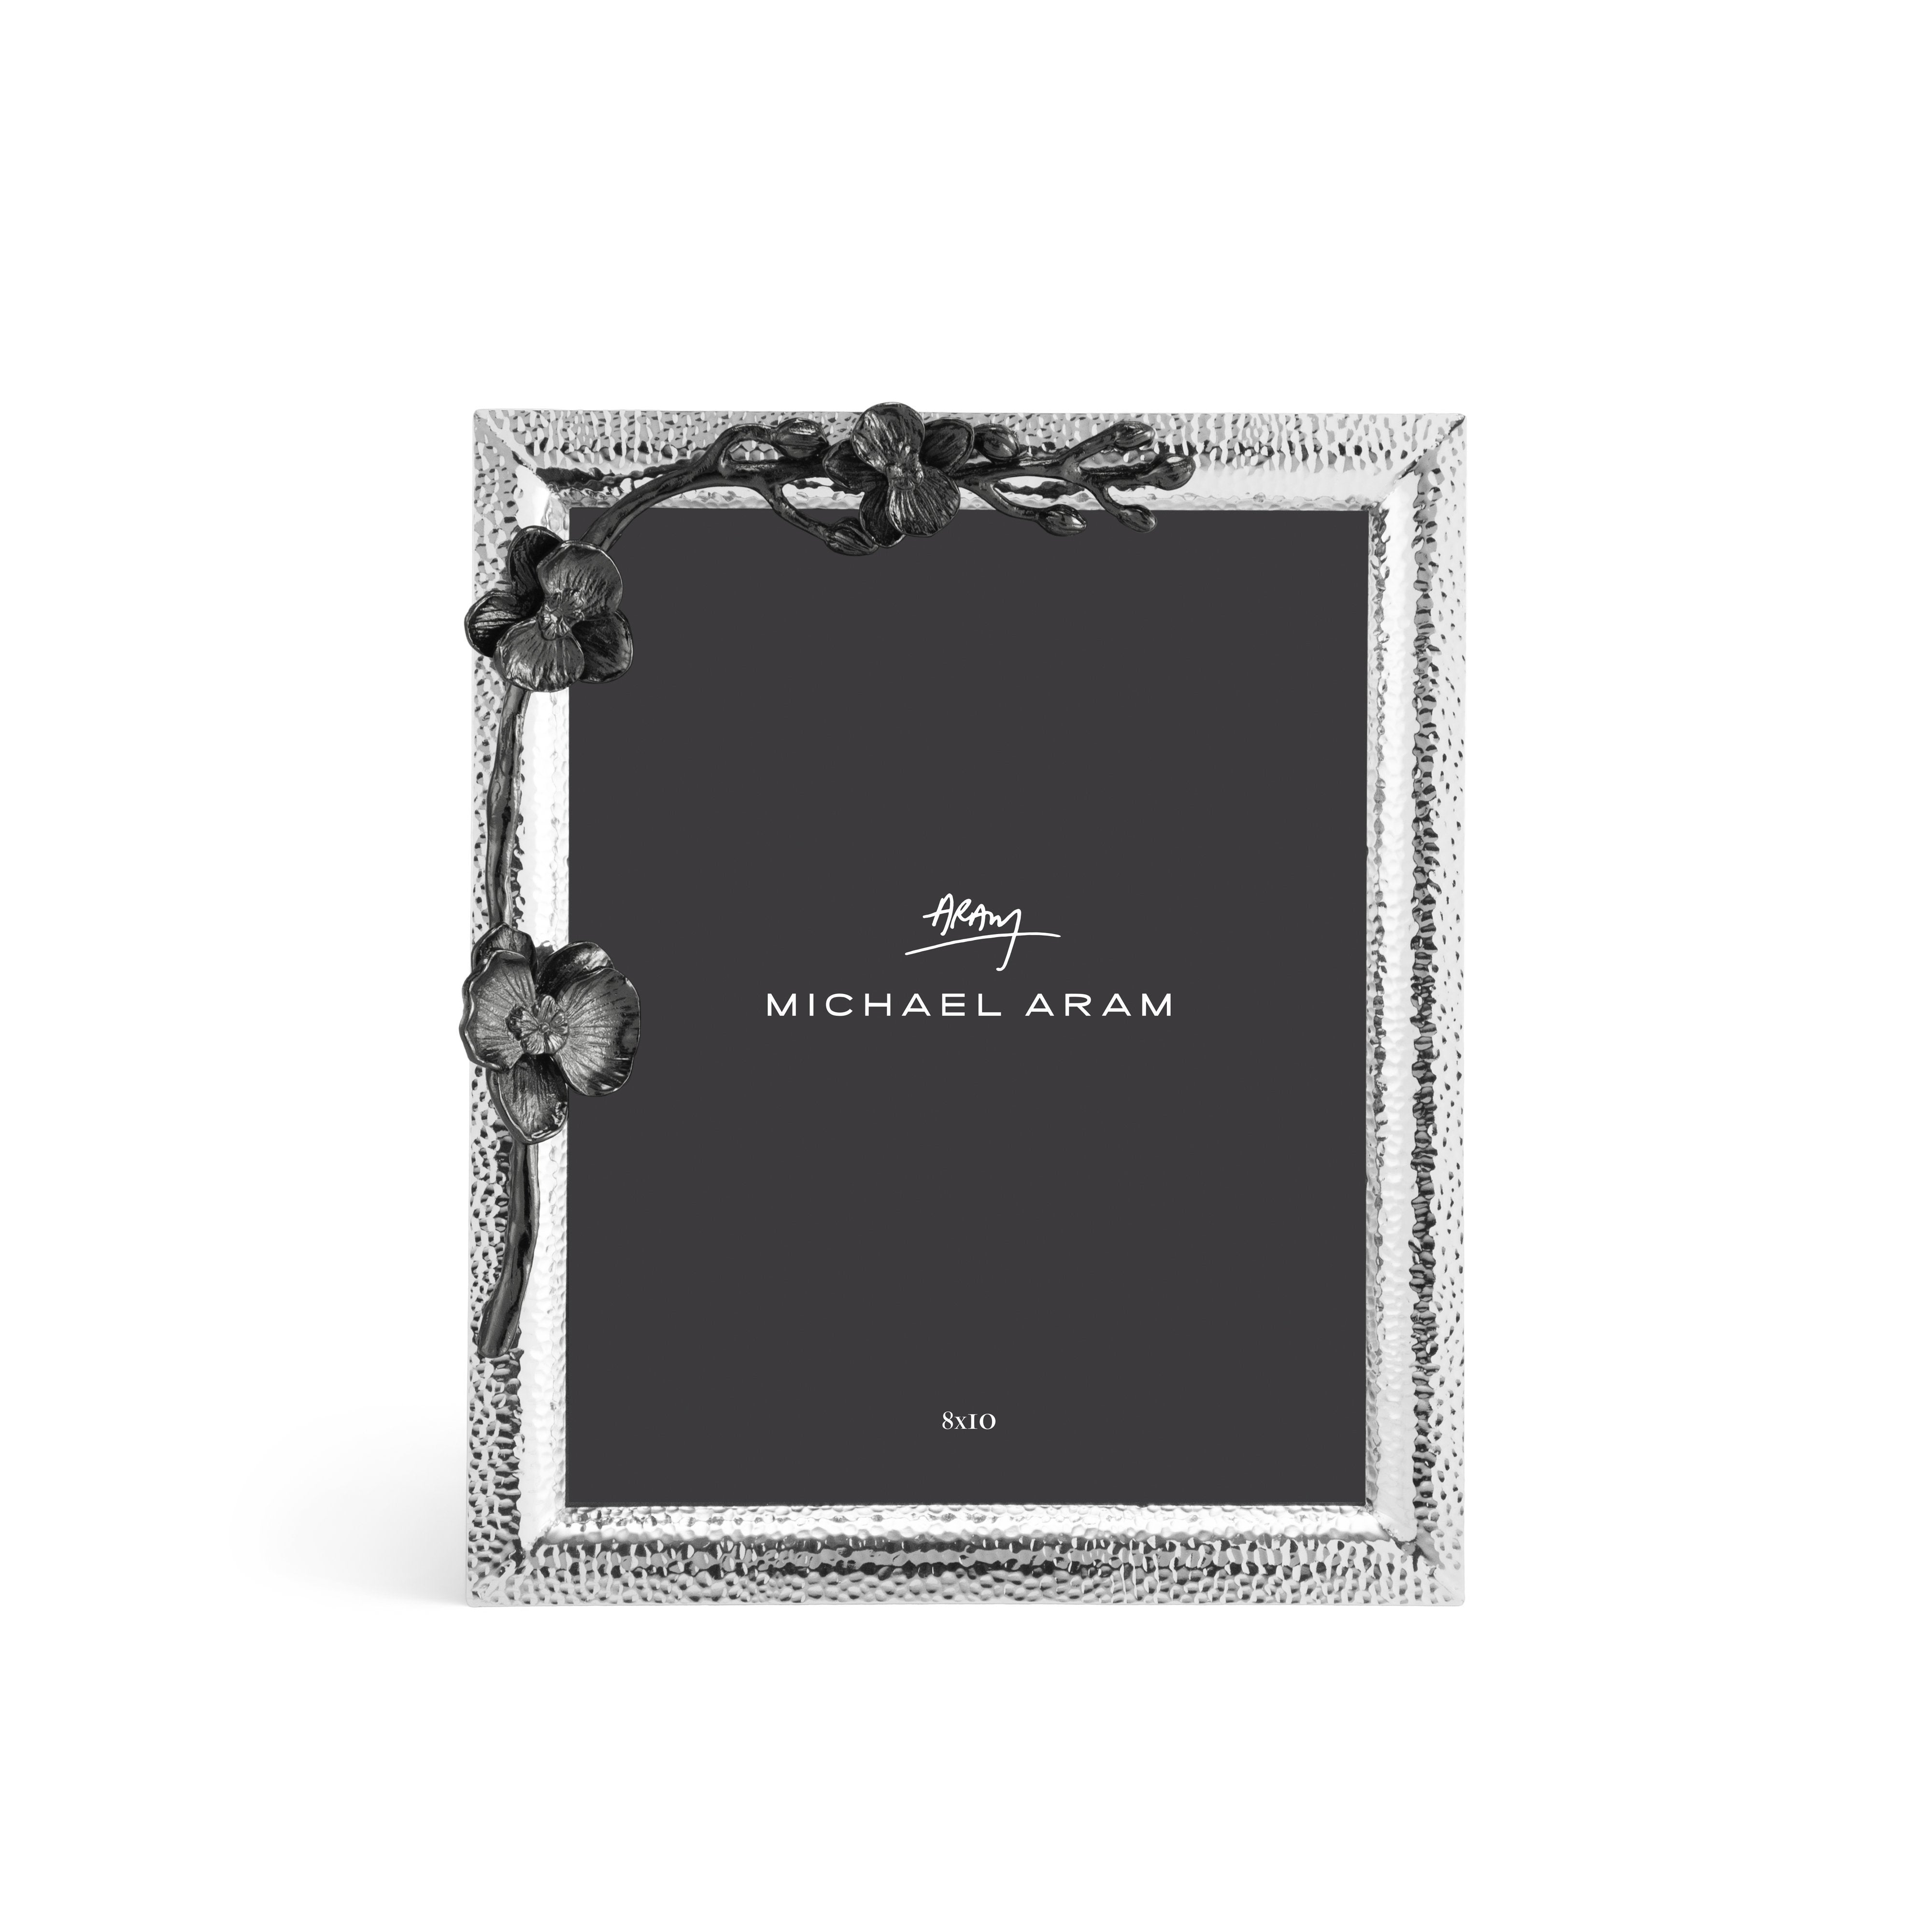 Michael Aram Black Orchid Frame 8x10